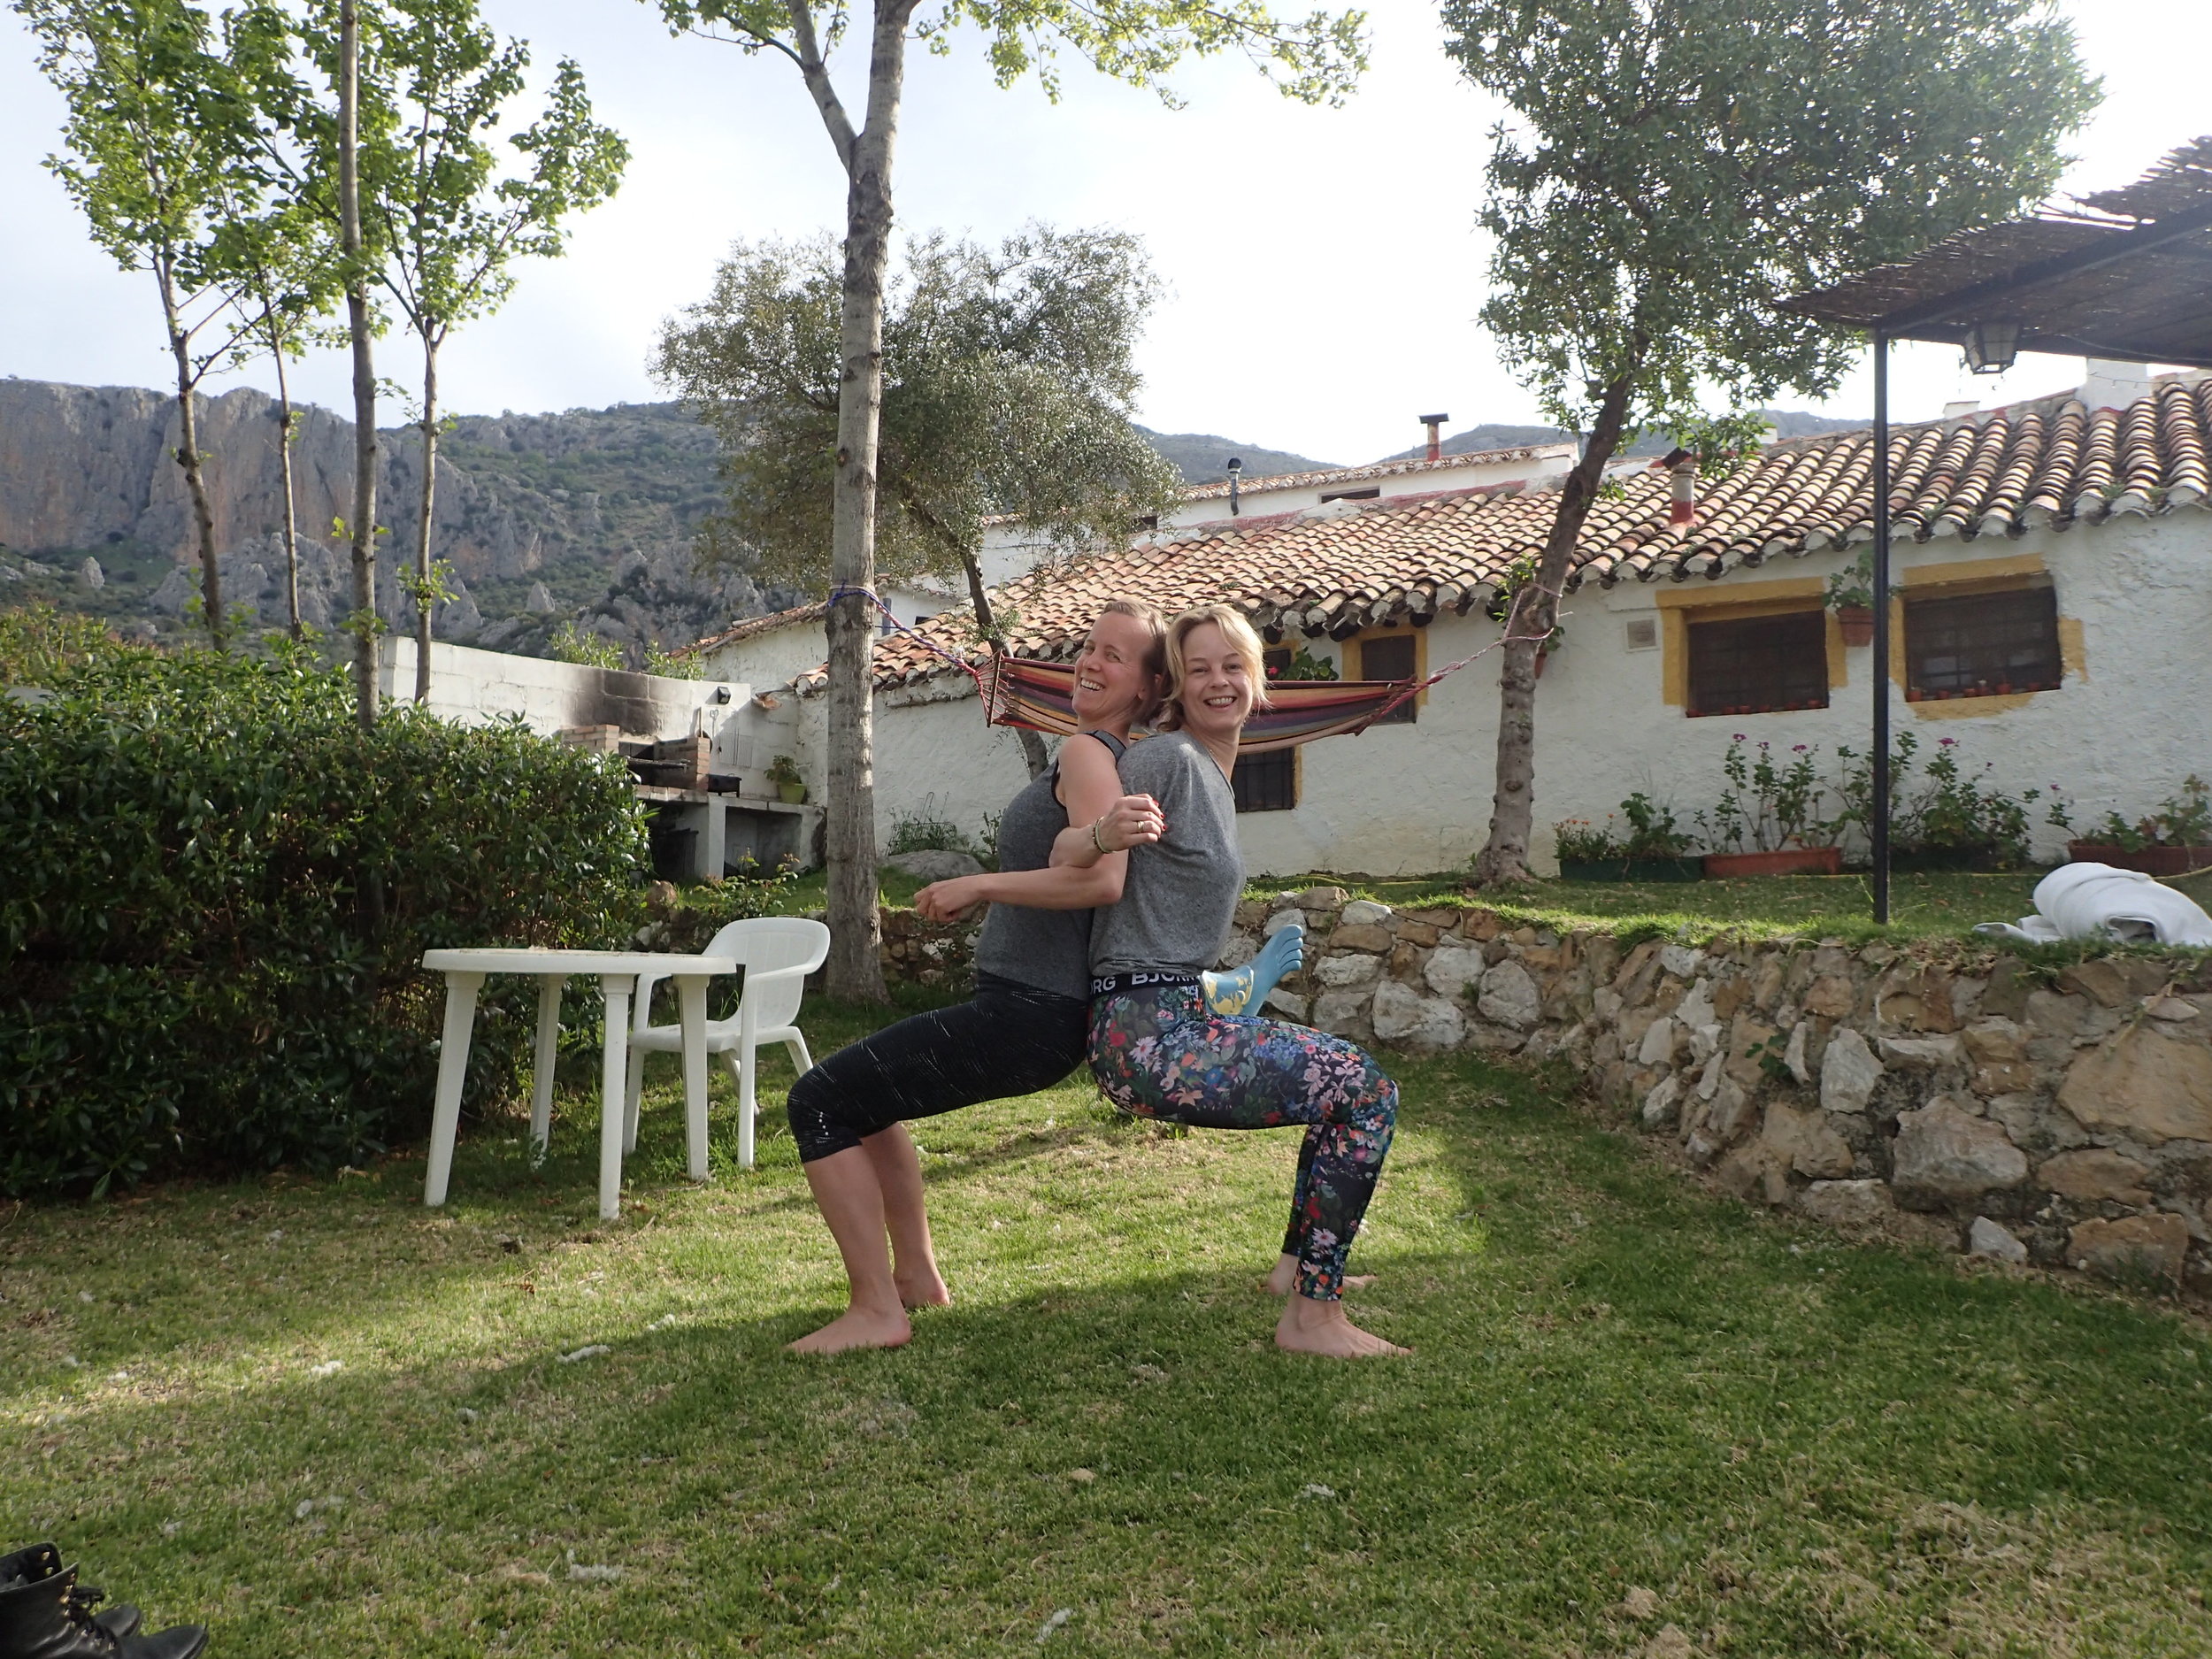 Partner Yoga in garden Yin Yang Yoga retreat Malaga mountains Spain (Copy) (Copy)